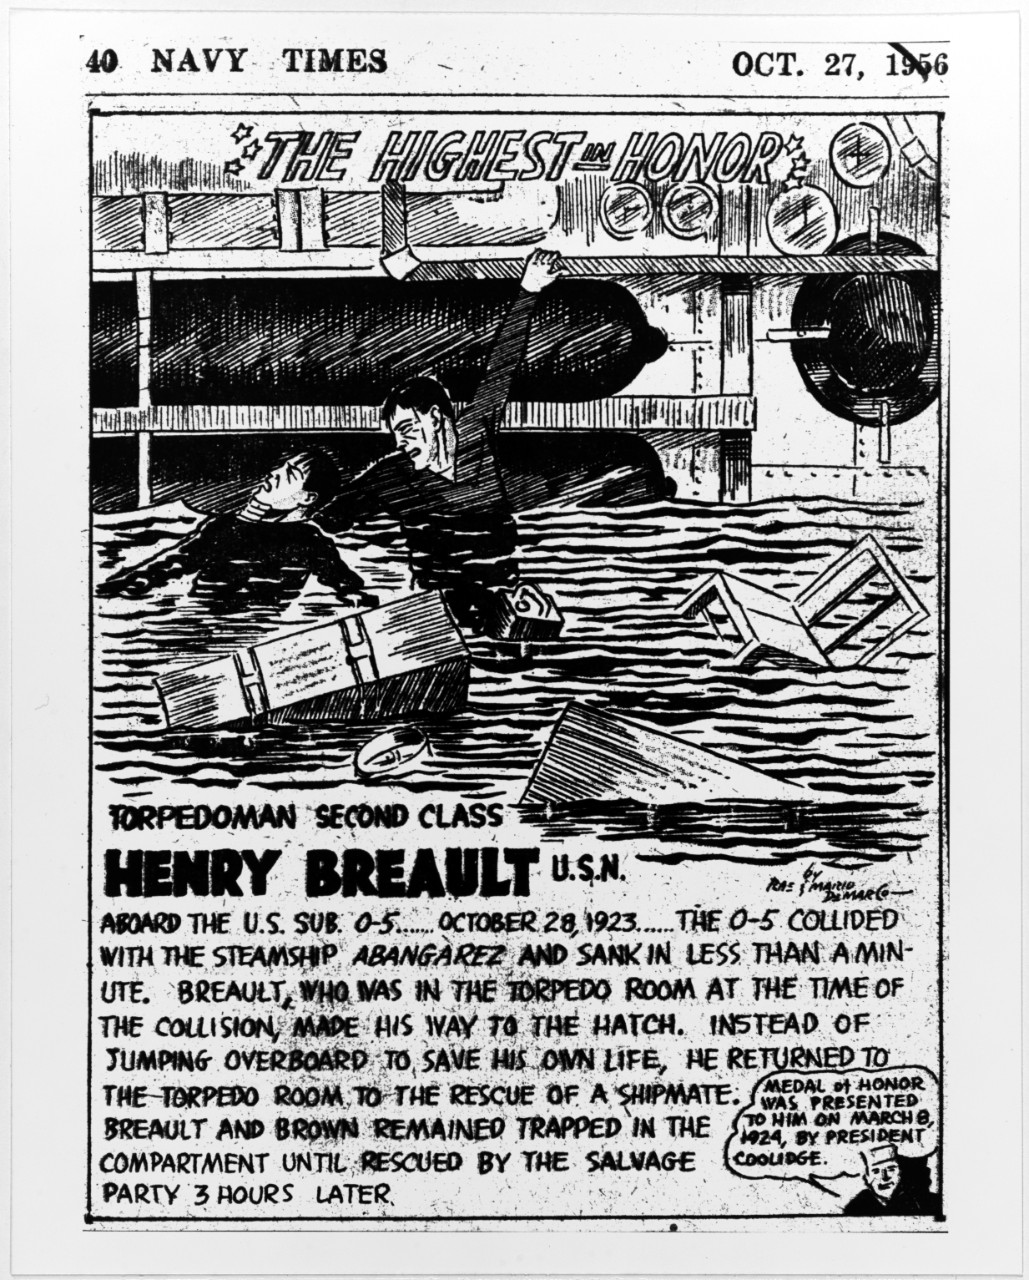 Torpedoman Second Class Henry Breault, USN